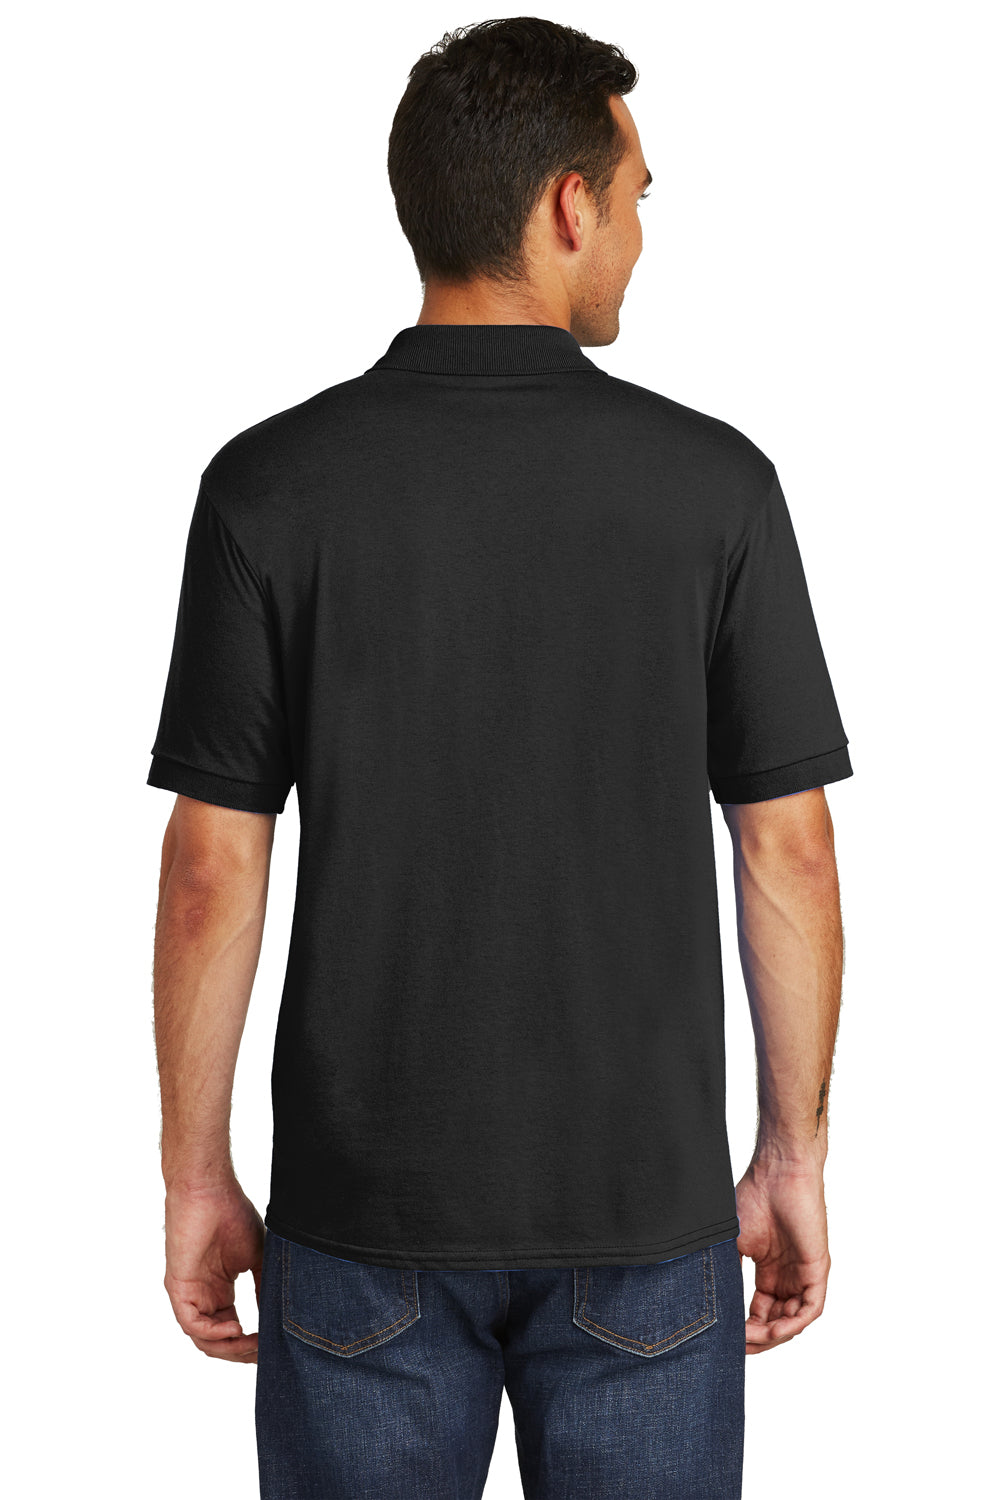 Port & Company KP55 Mens Core Stain Resistant Short Sleeve Polo Shirt Black Back